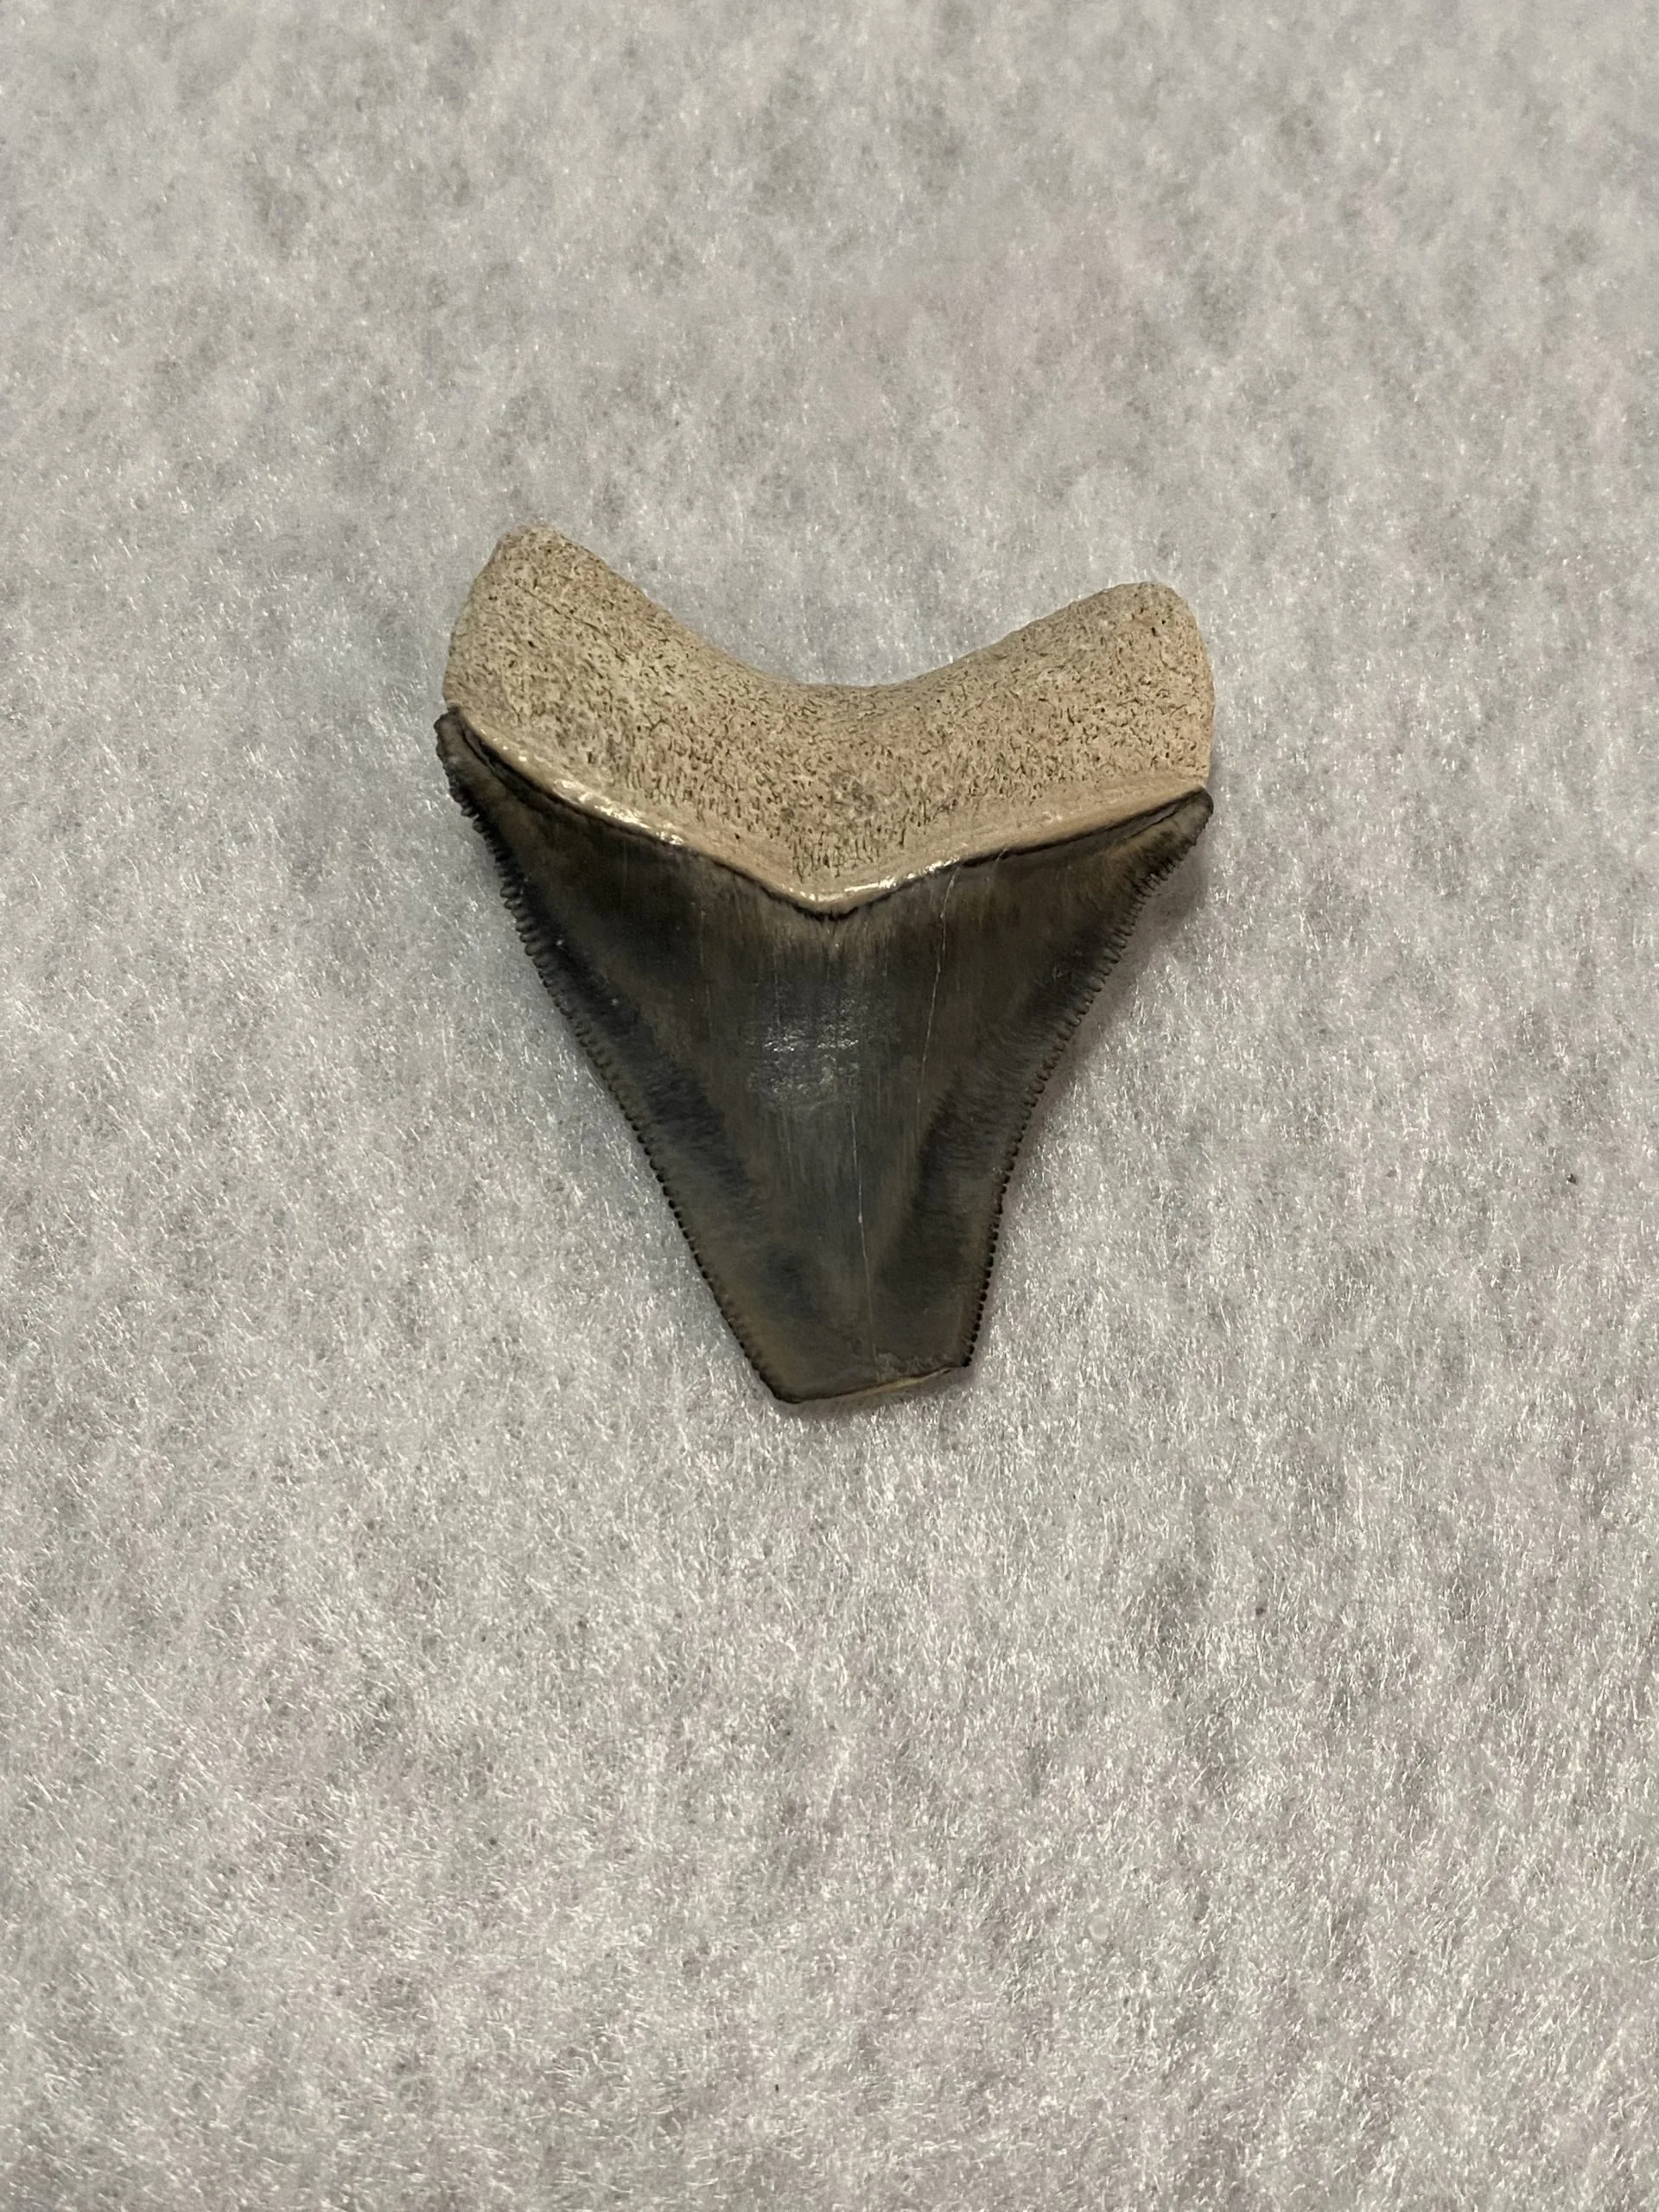 Megalodon Tooth, Bone Valley, Florida, 2.10 inch Prehistoric Online